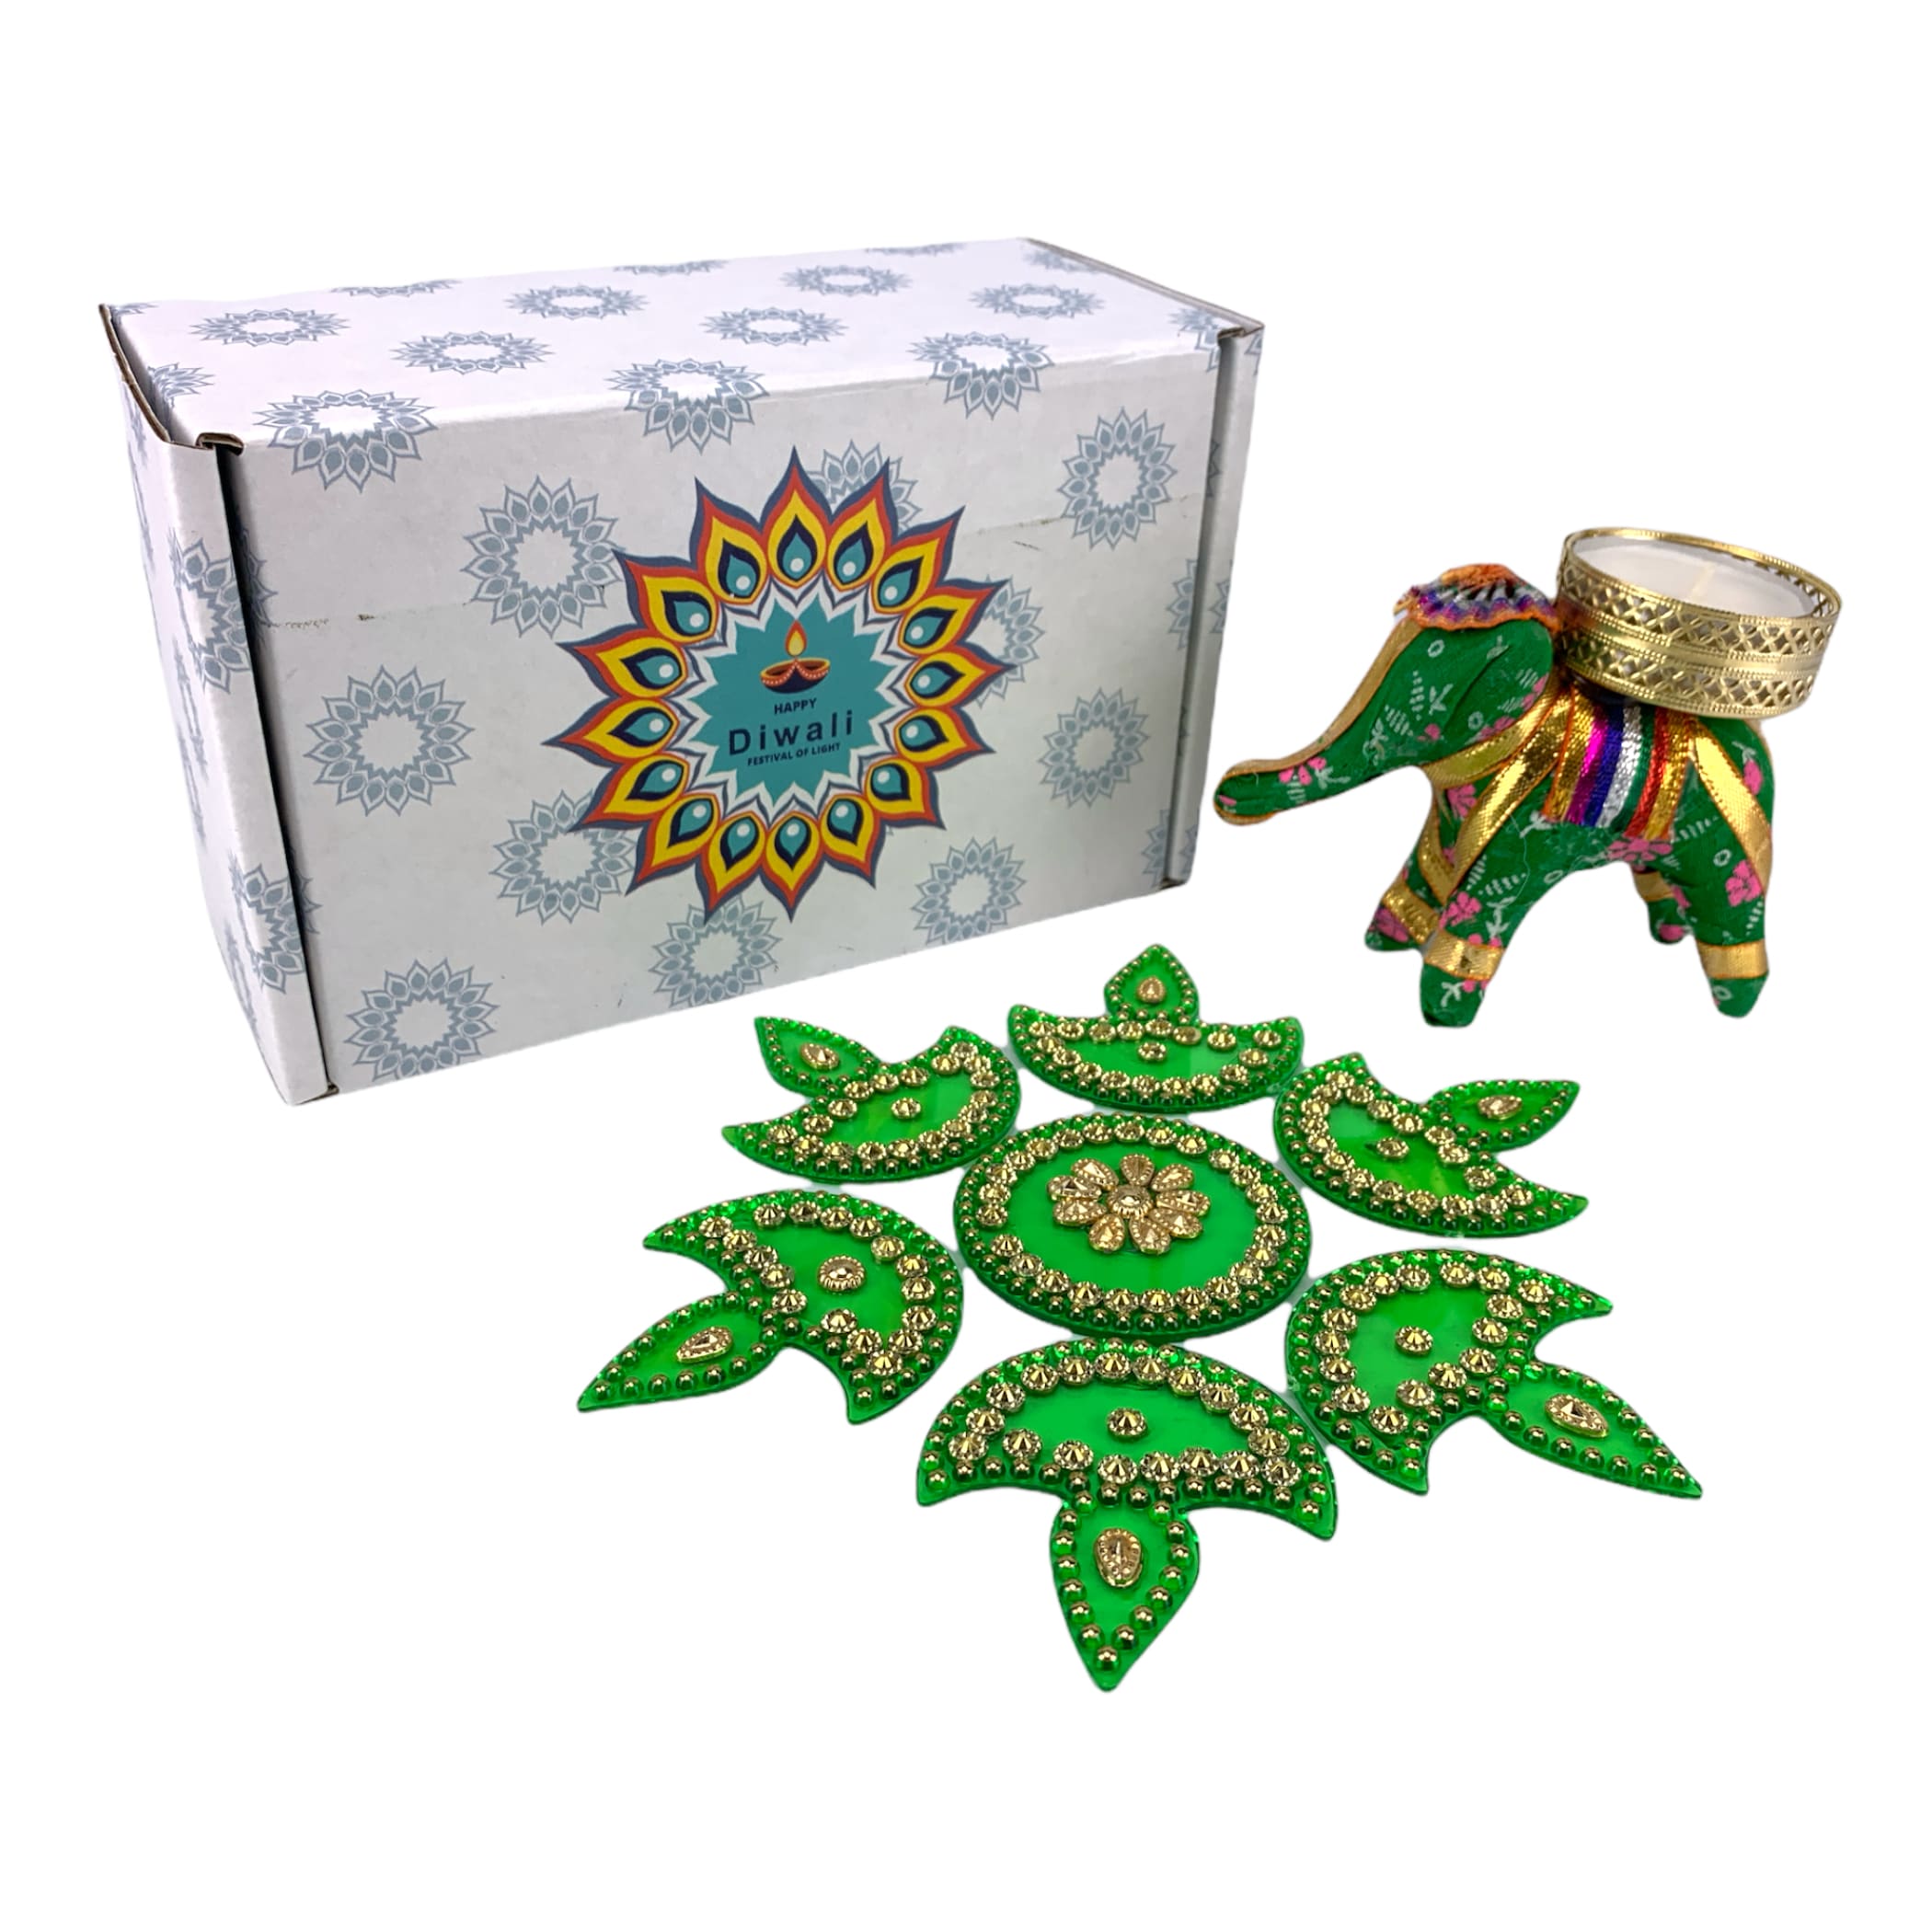 Personalize diwali gifts box navratri sweet gift boxes